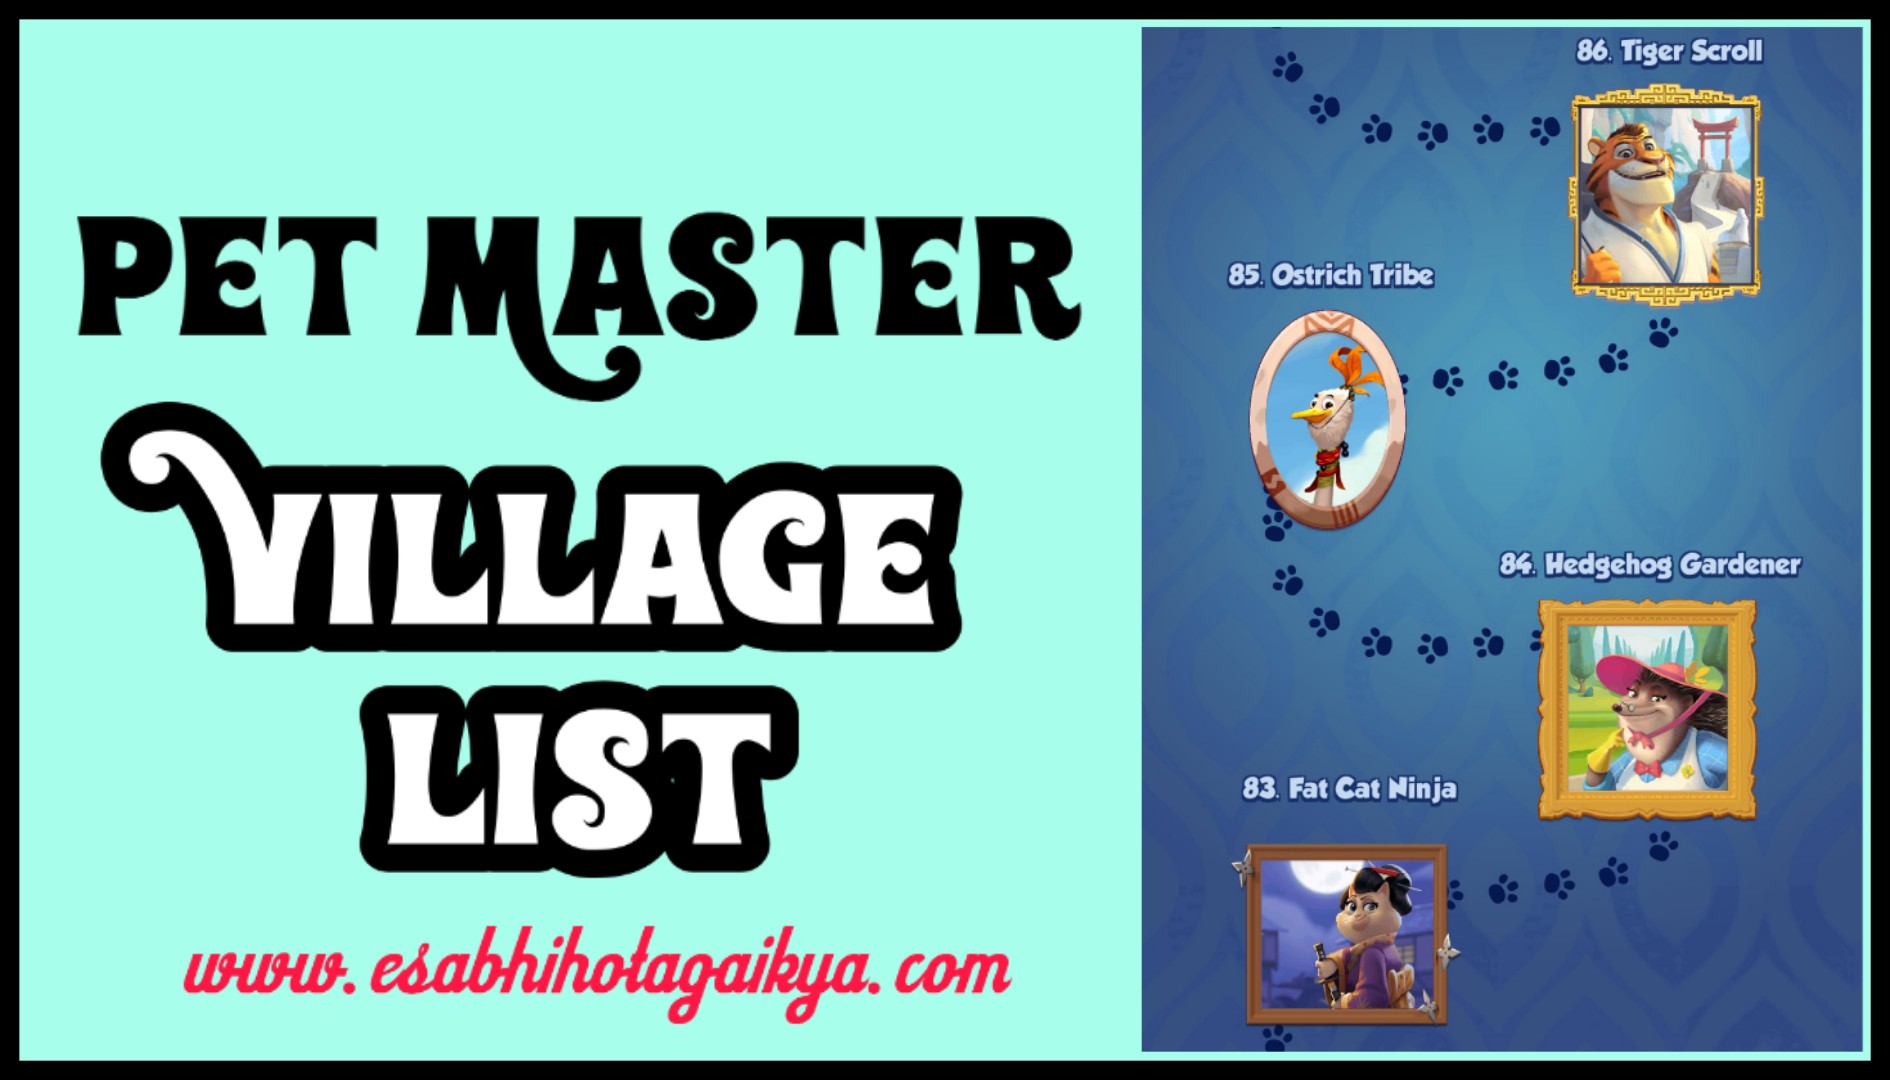 Pet Master Village List